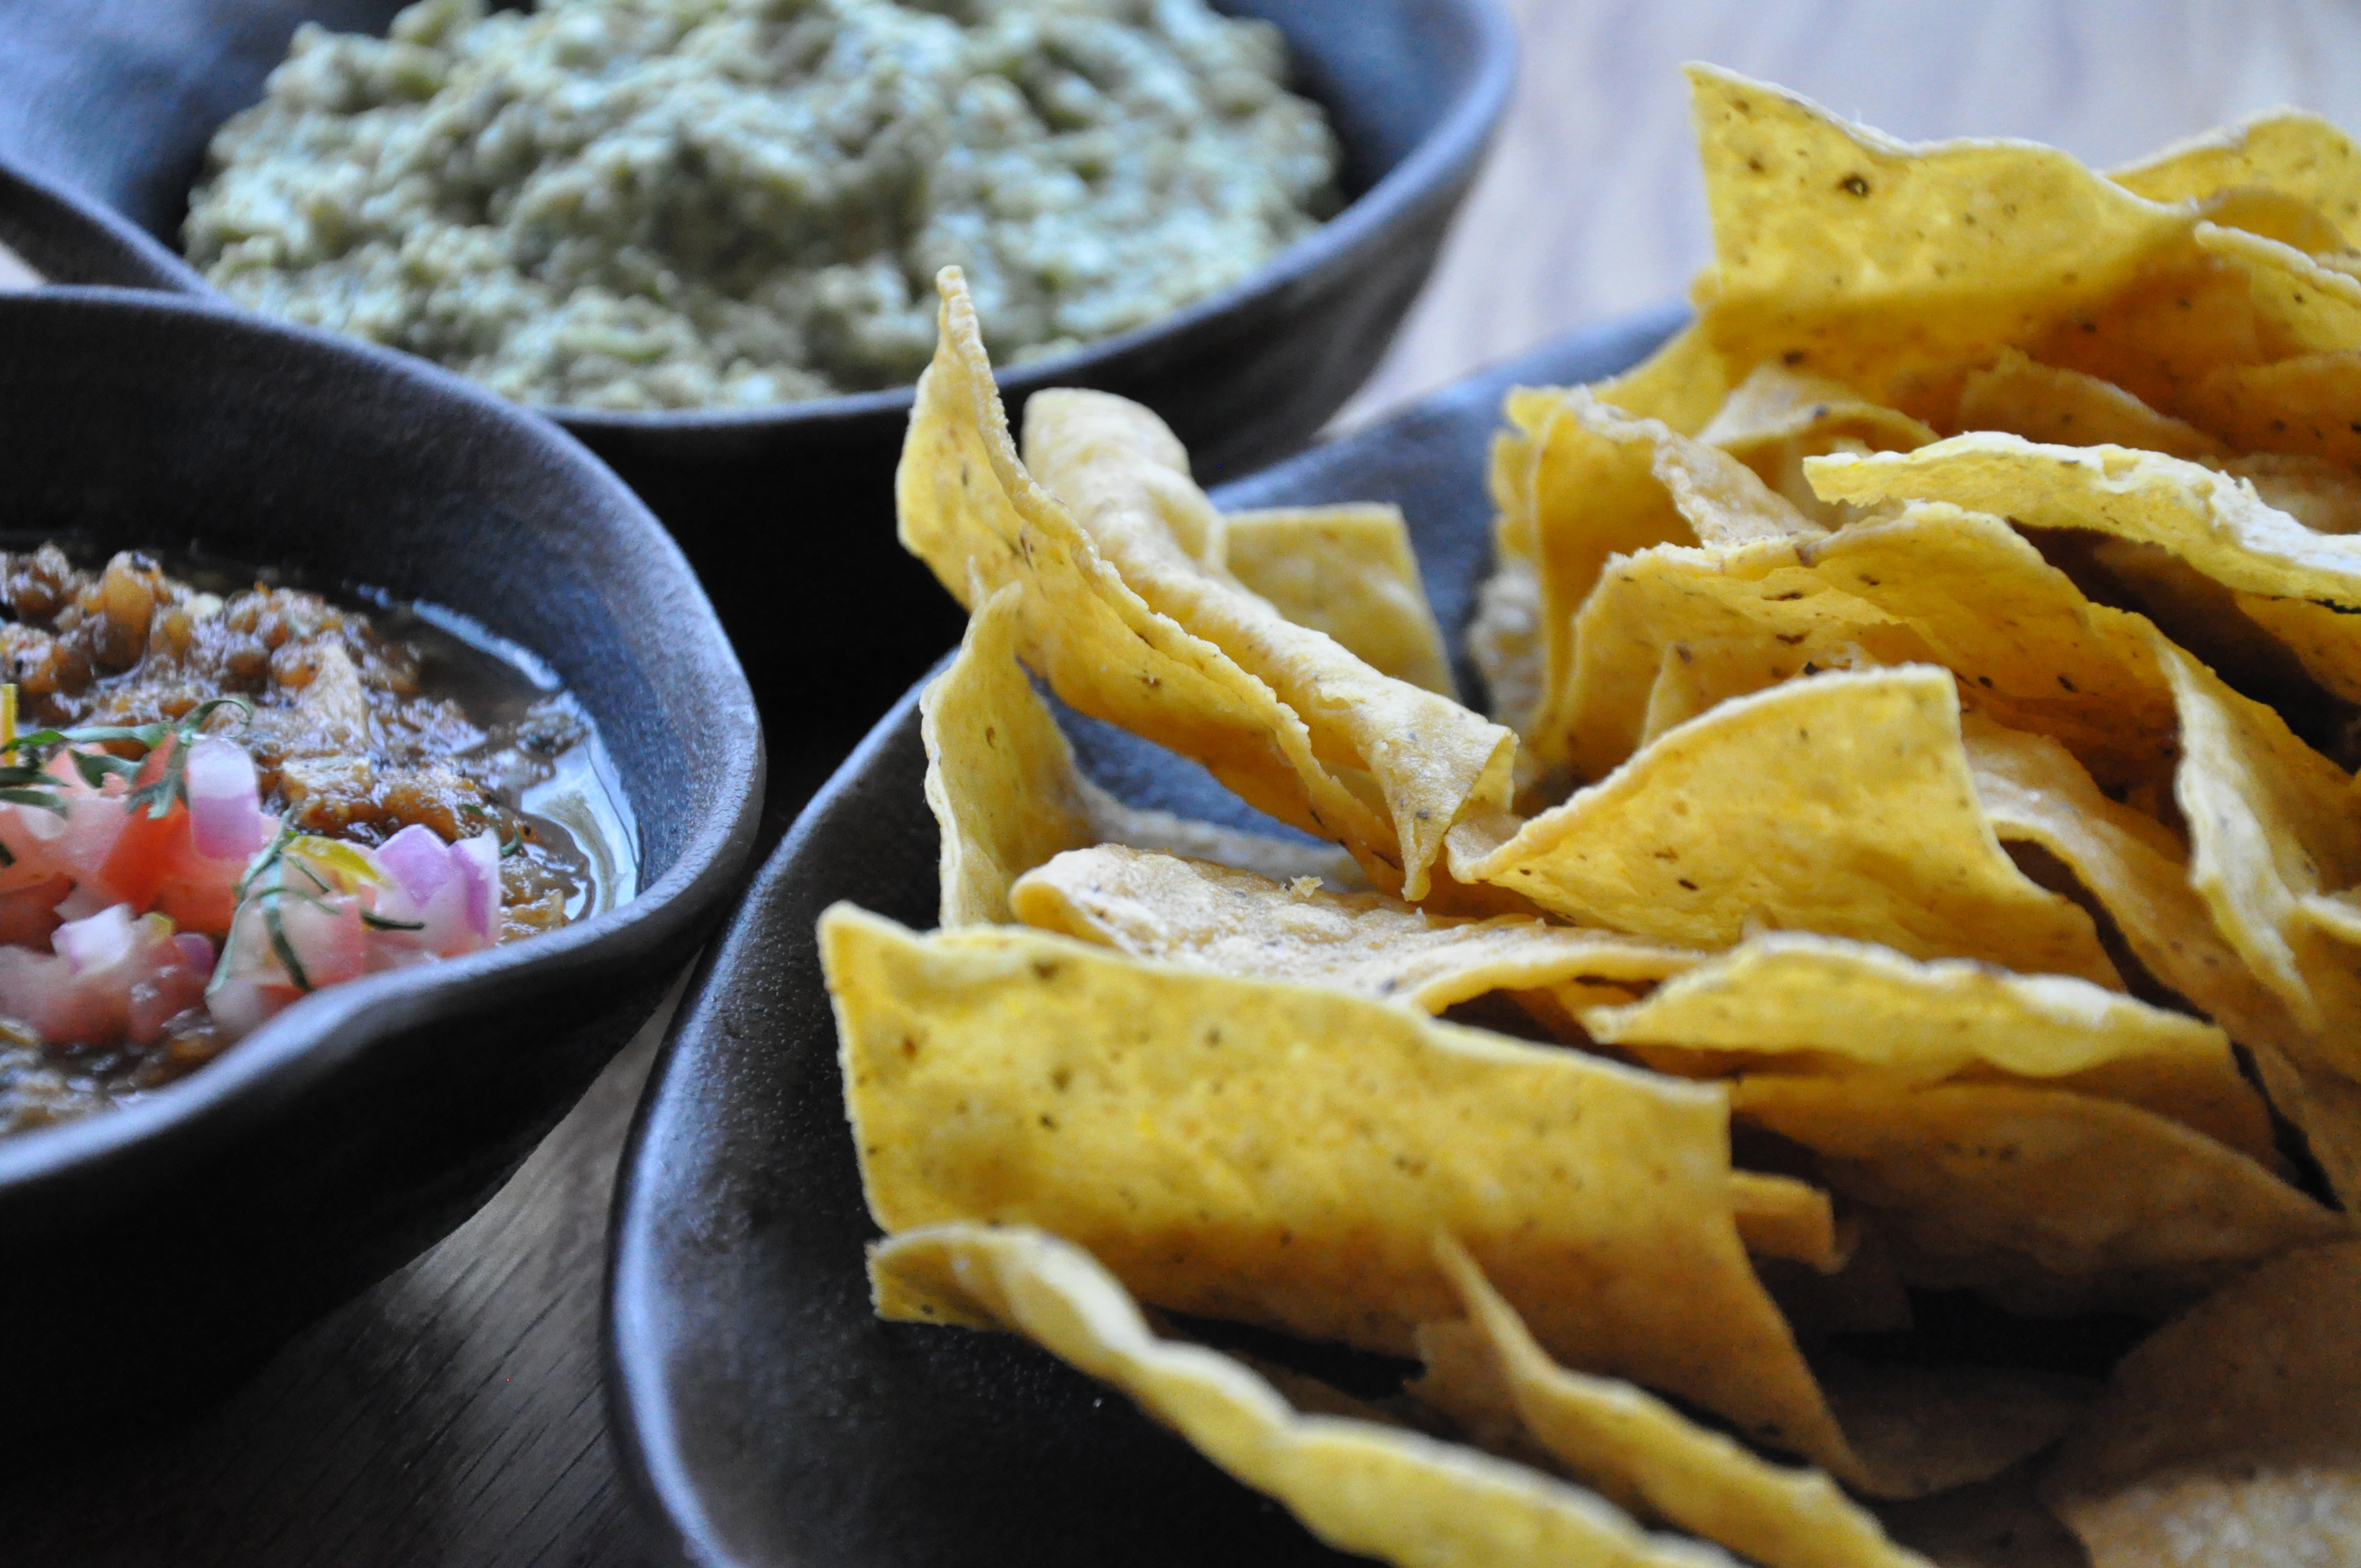 Explore Latin American cuisines during Latin Restaurant Weeks